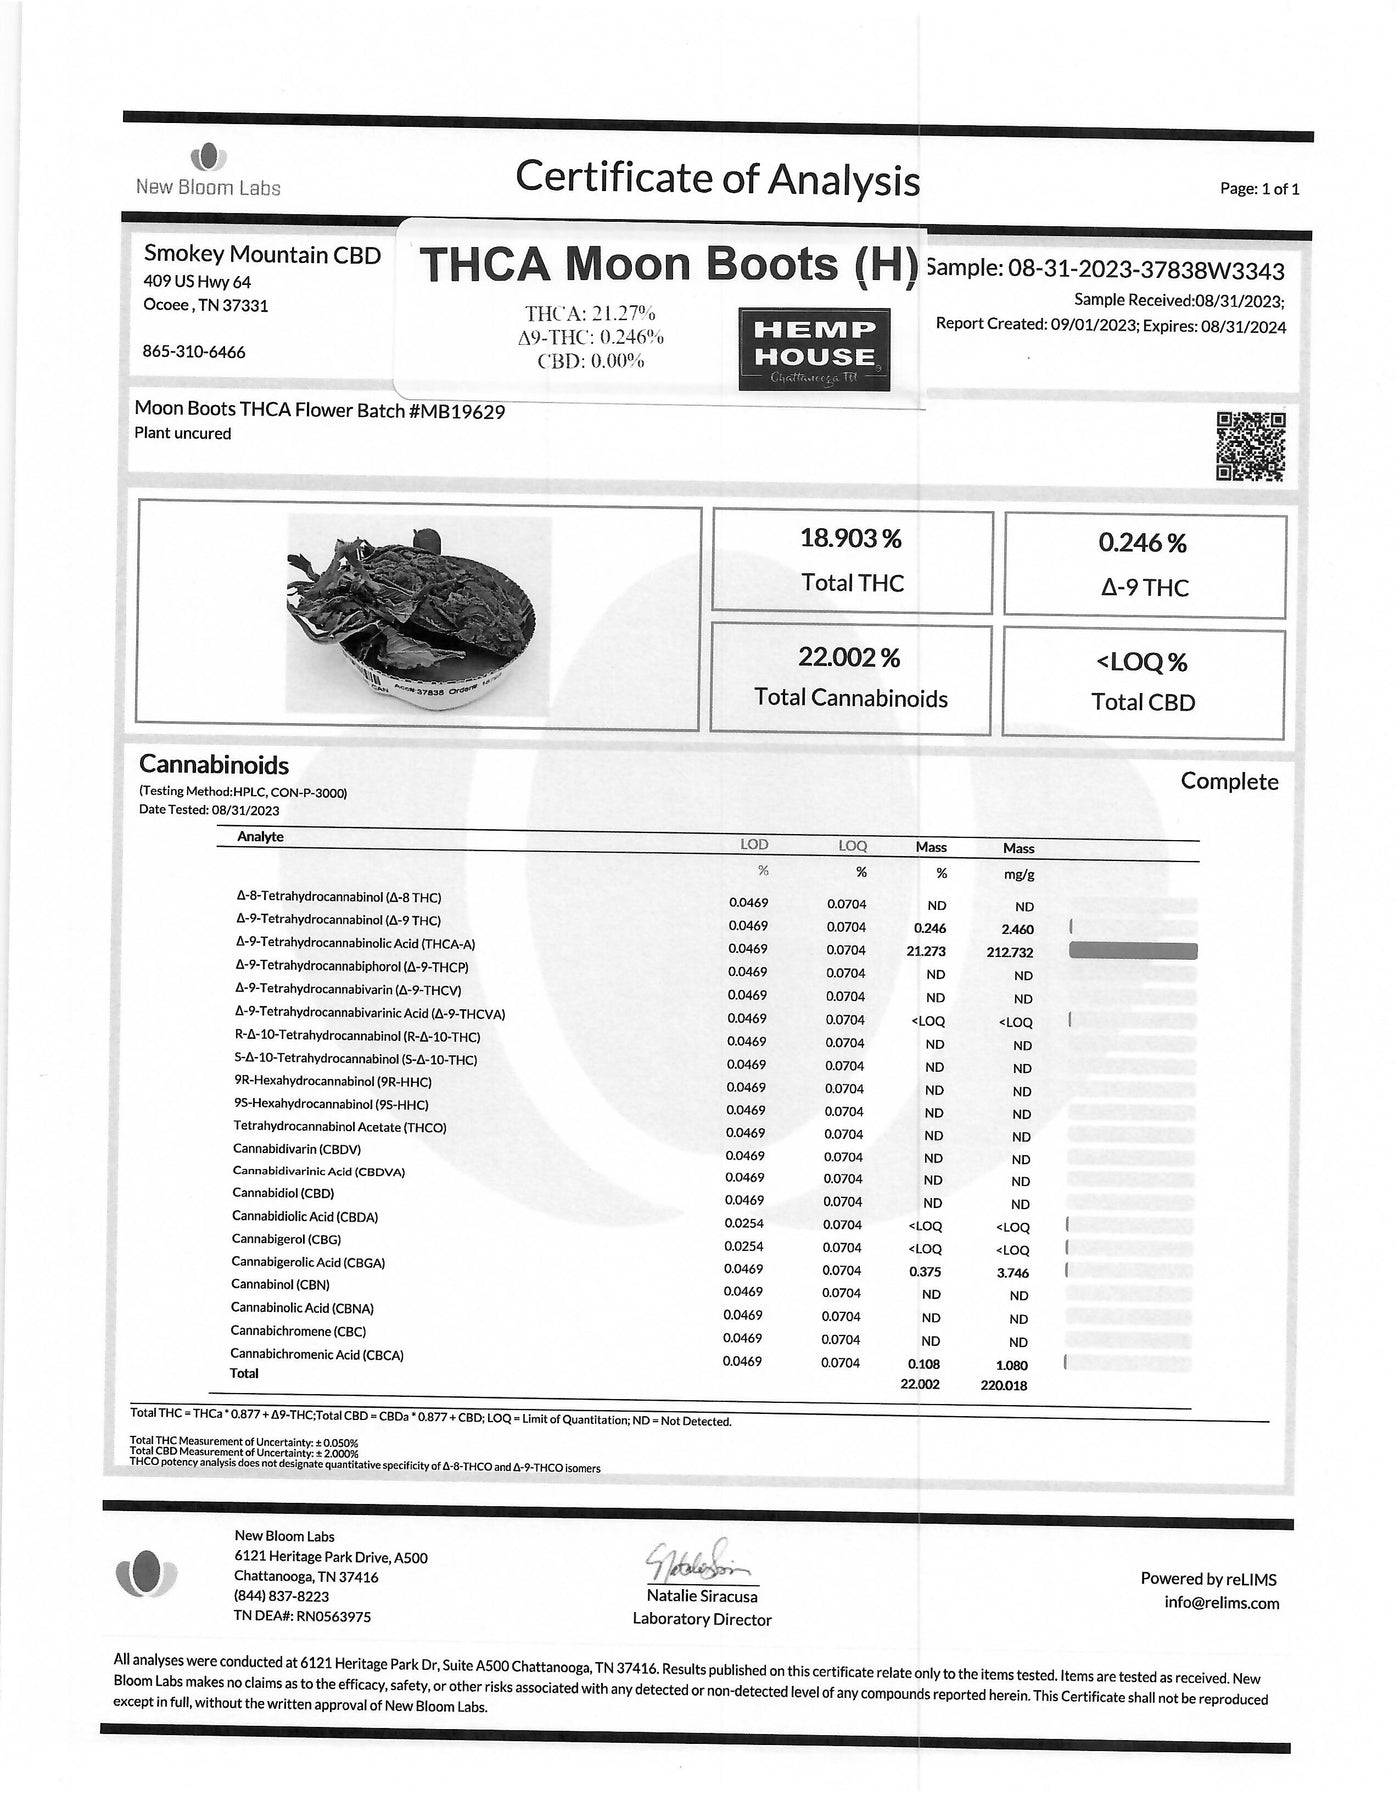 THCA Moon Boots (H) - Flower